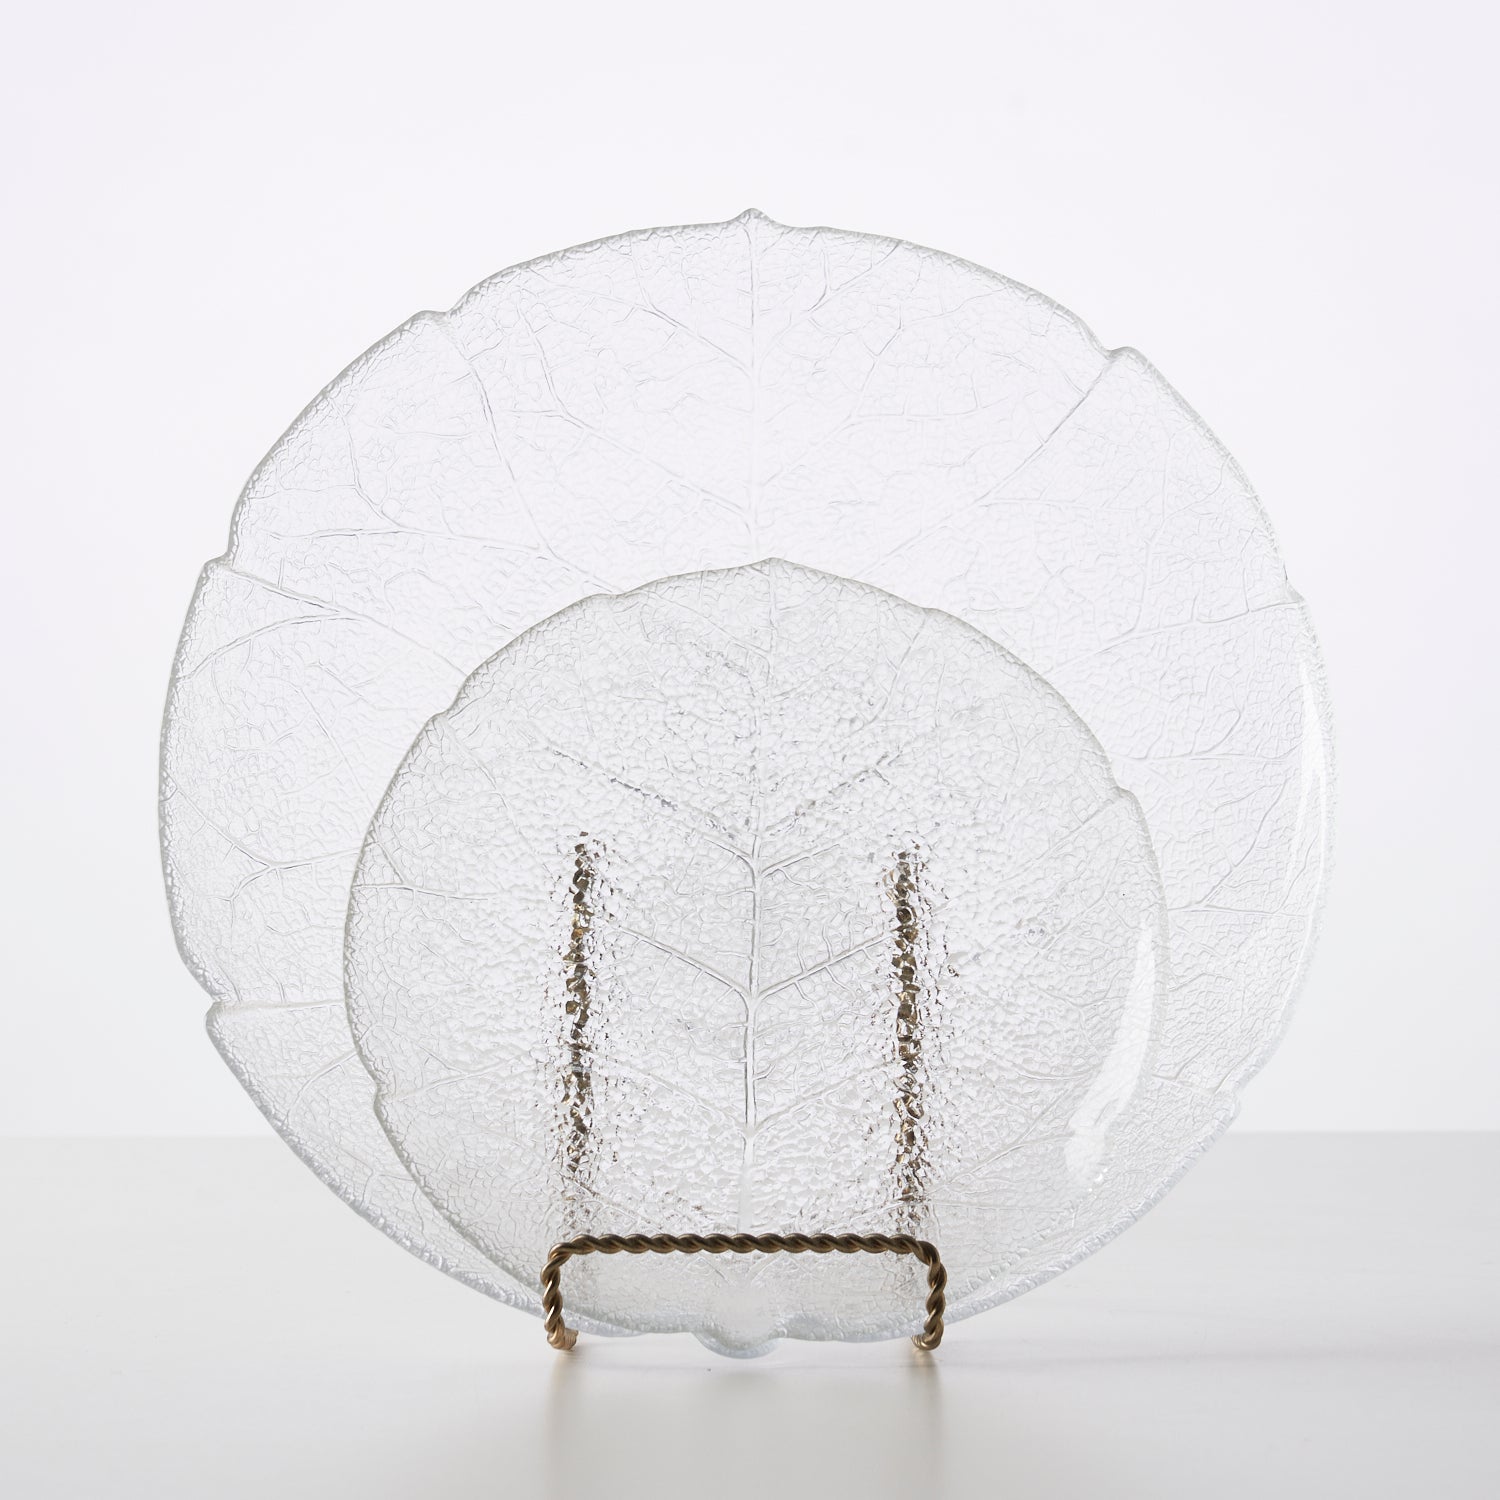 Pair of Glass Leaf Design Plates